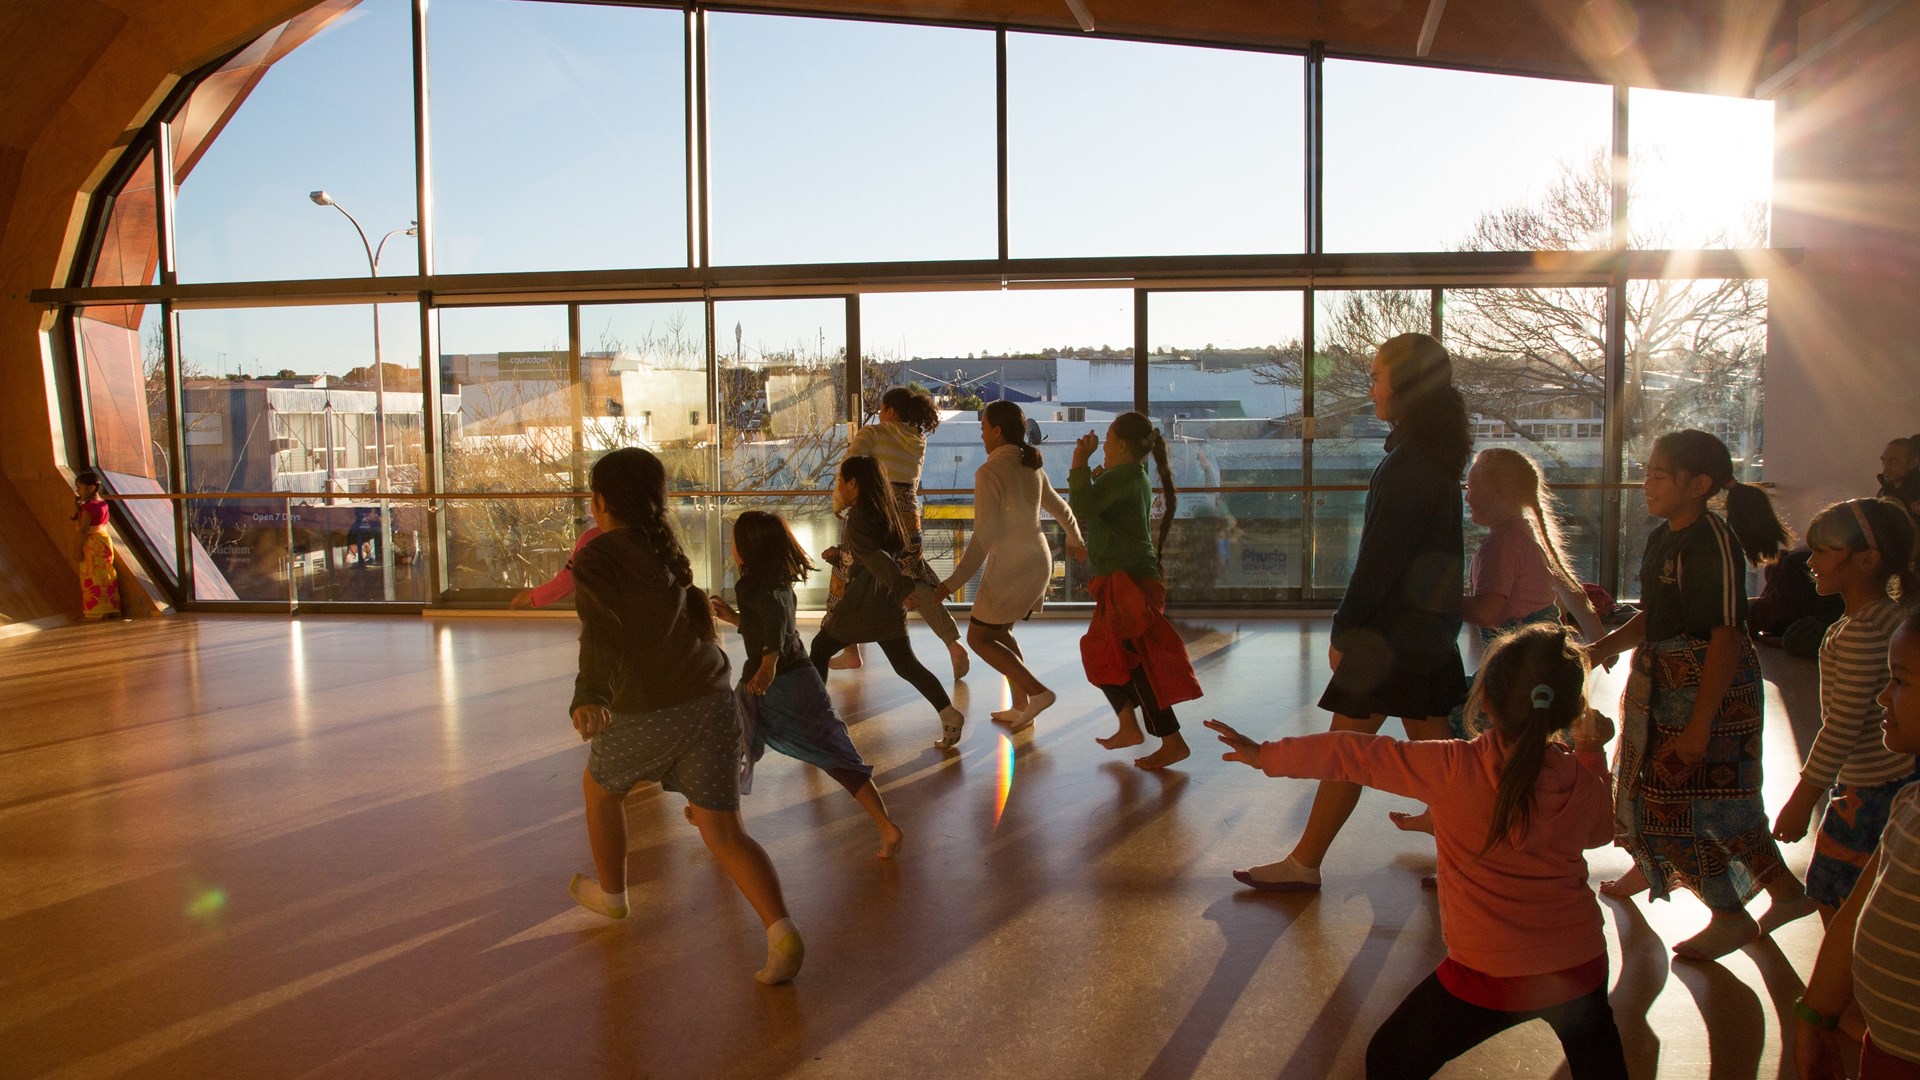 Children playing in Te Oro, the Glenn Innes Community Centre. The name ‘Te Oro’ has been gifted to the centre by Ngāti Pāoa with the endorsement of Ngāi Tai ki Tāmaki and Ngāti Whātua Ōrākei. Source: Sara Orme, New Zealand Story.